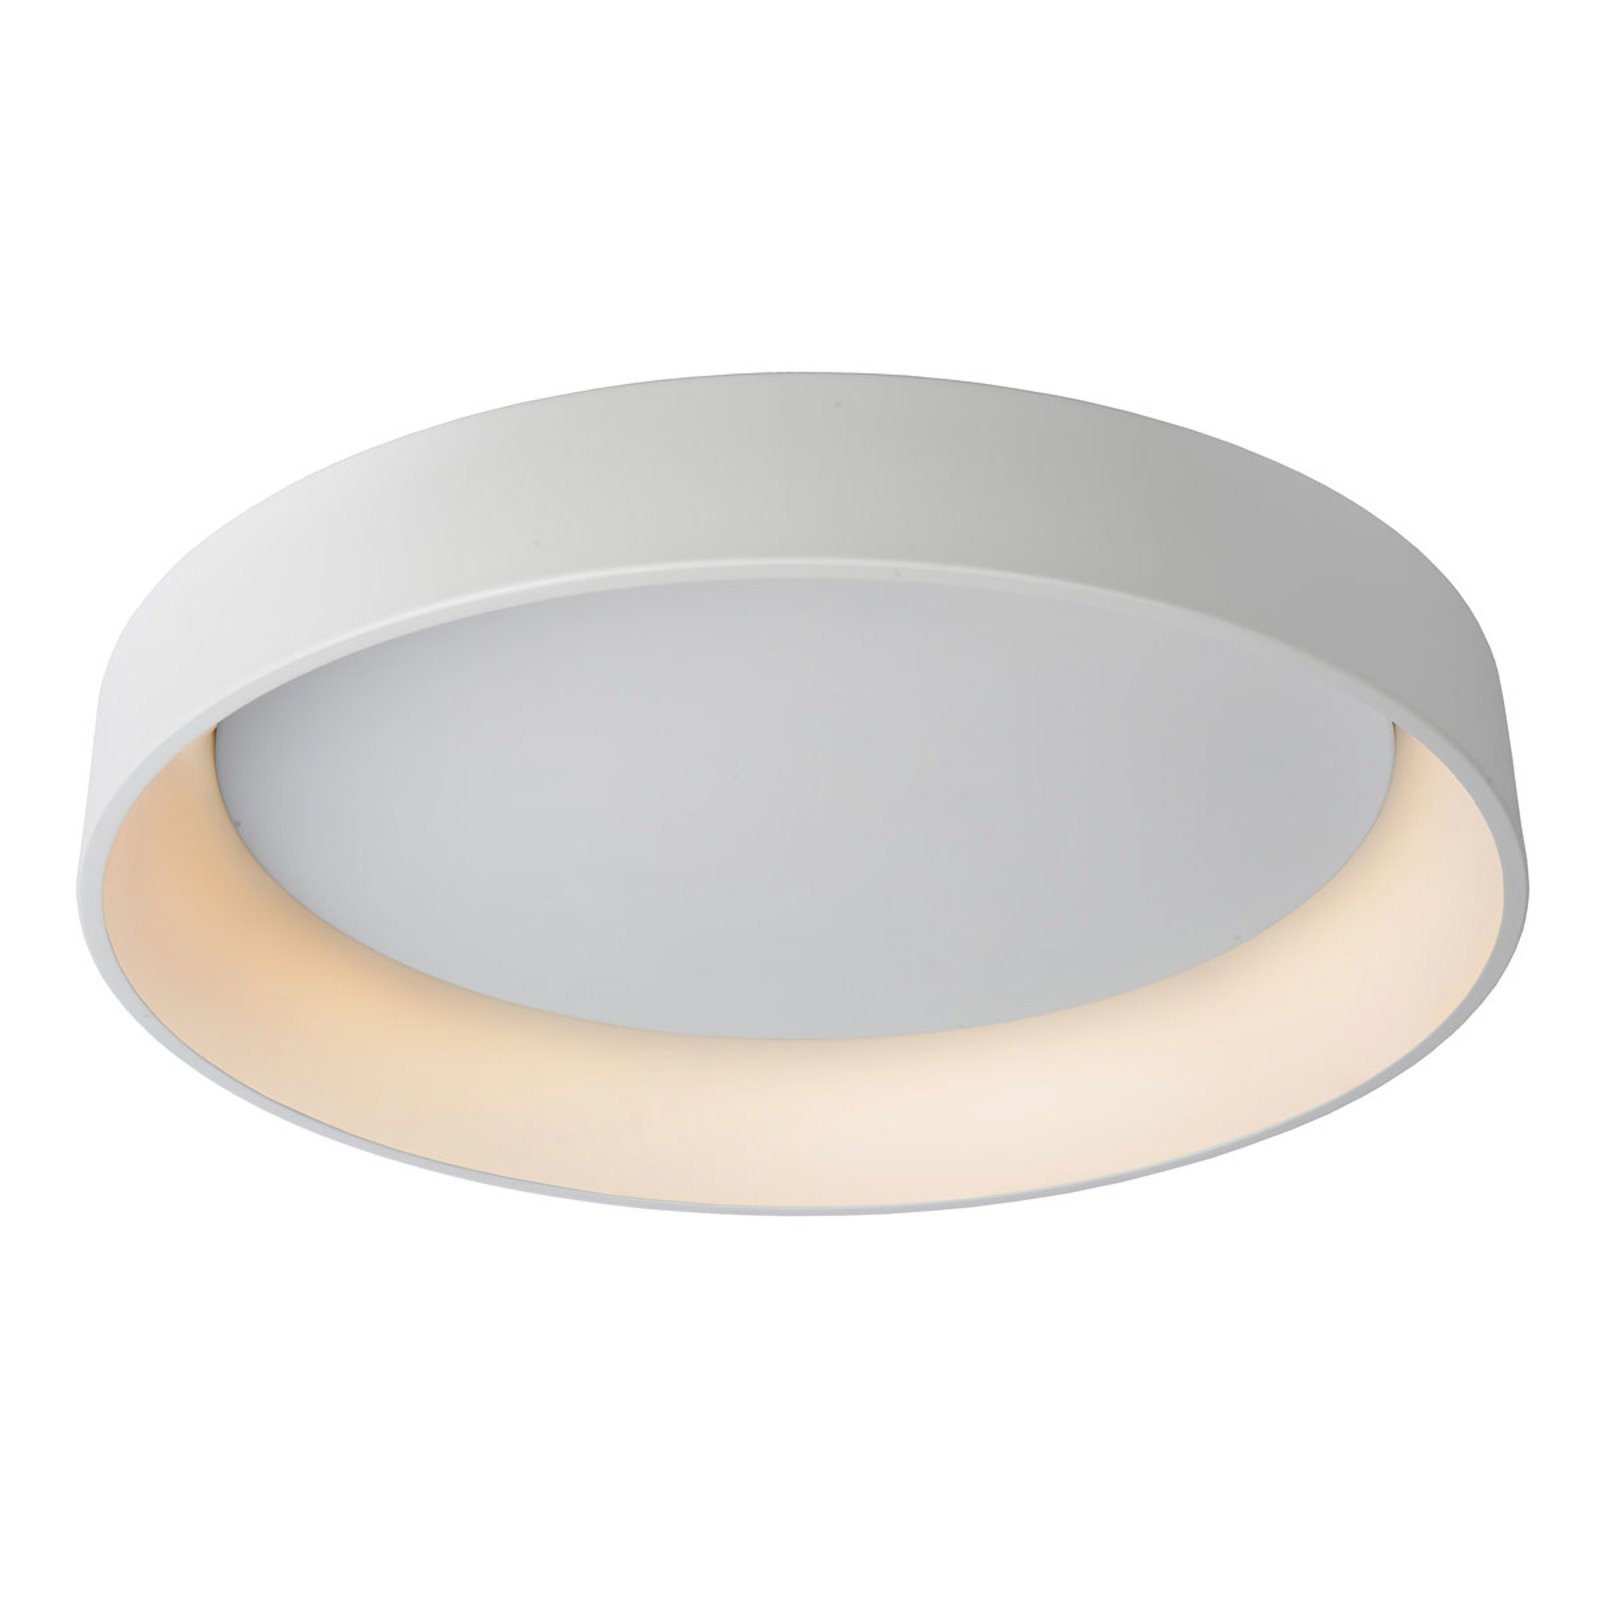 Talowe LED ceiling light, white, Ø 80 cm